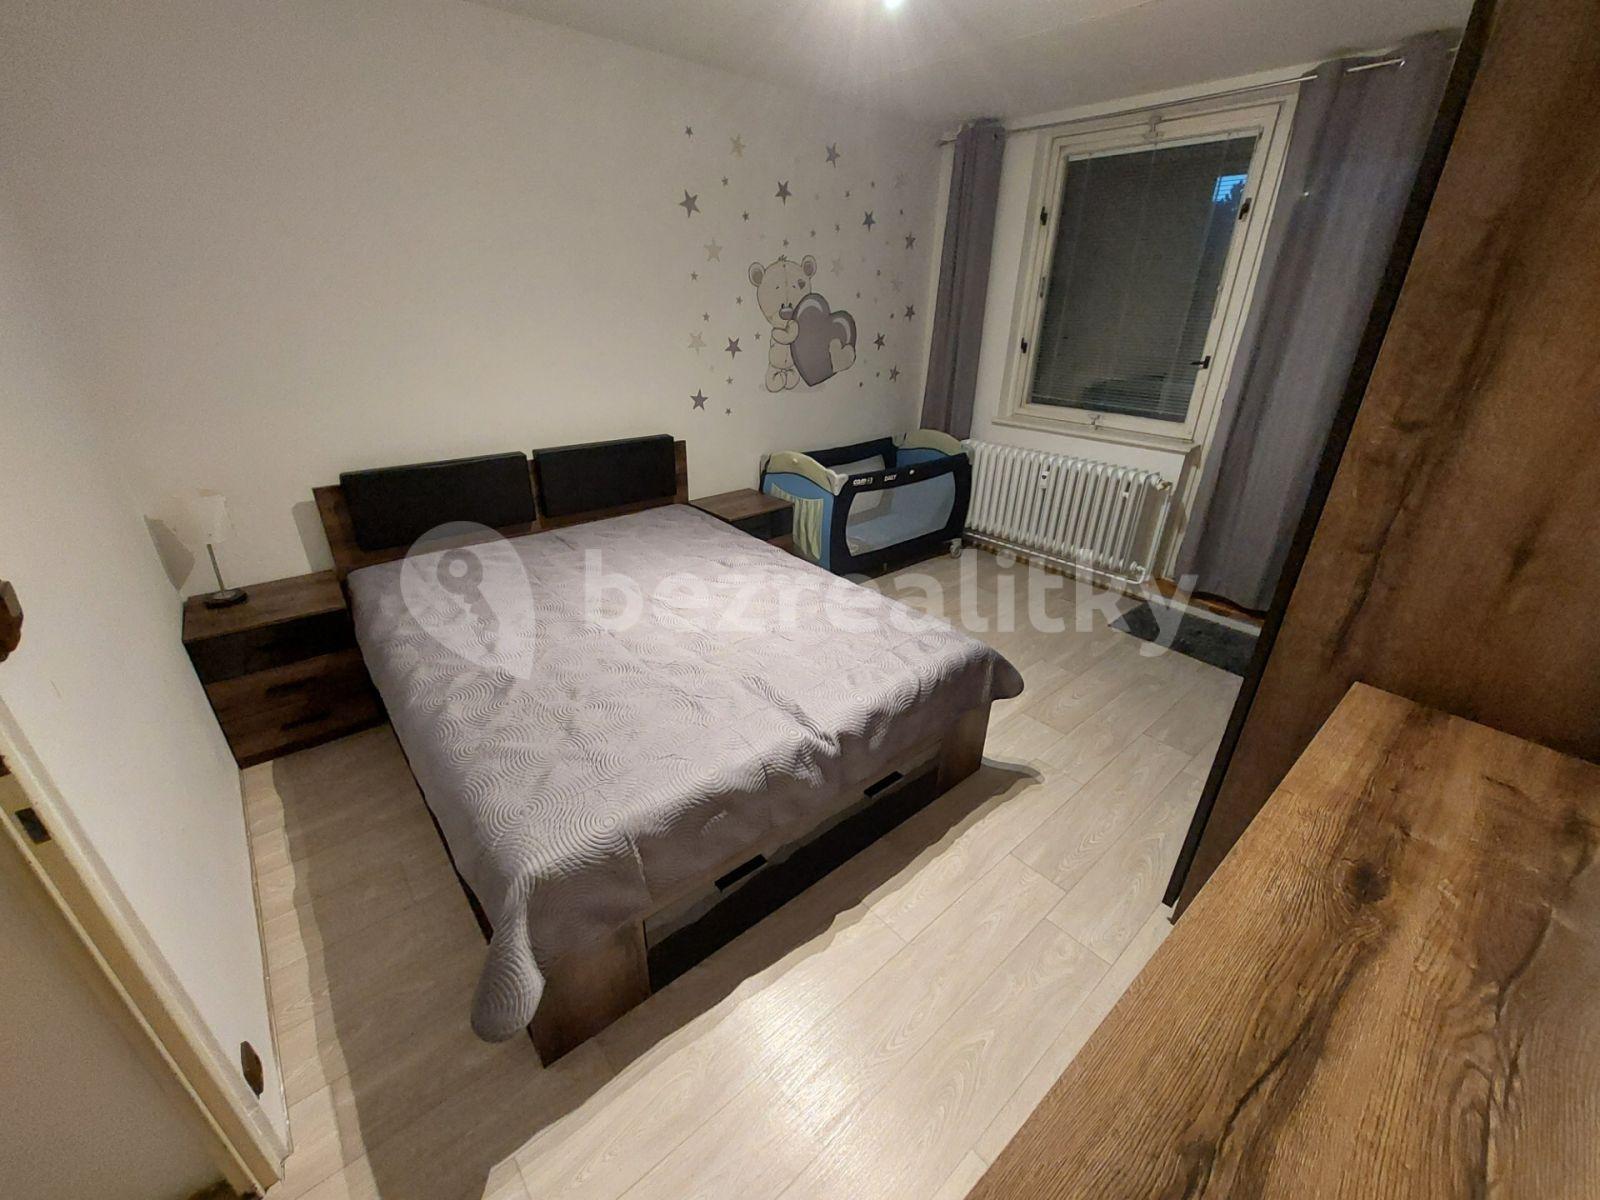 1 bedroom with open-plan kitchen flat for sale, 42 m², Prokofjevova, Brno, Jihomoravský Region